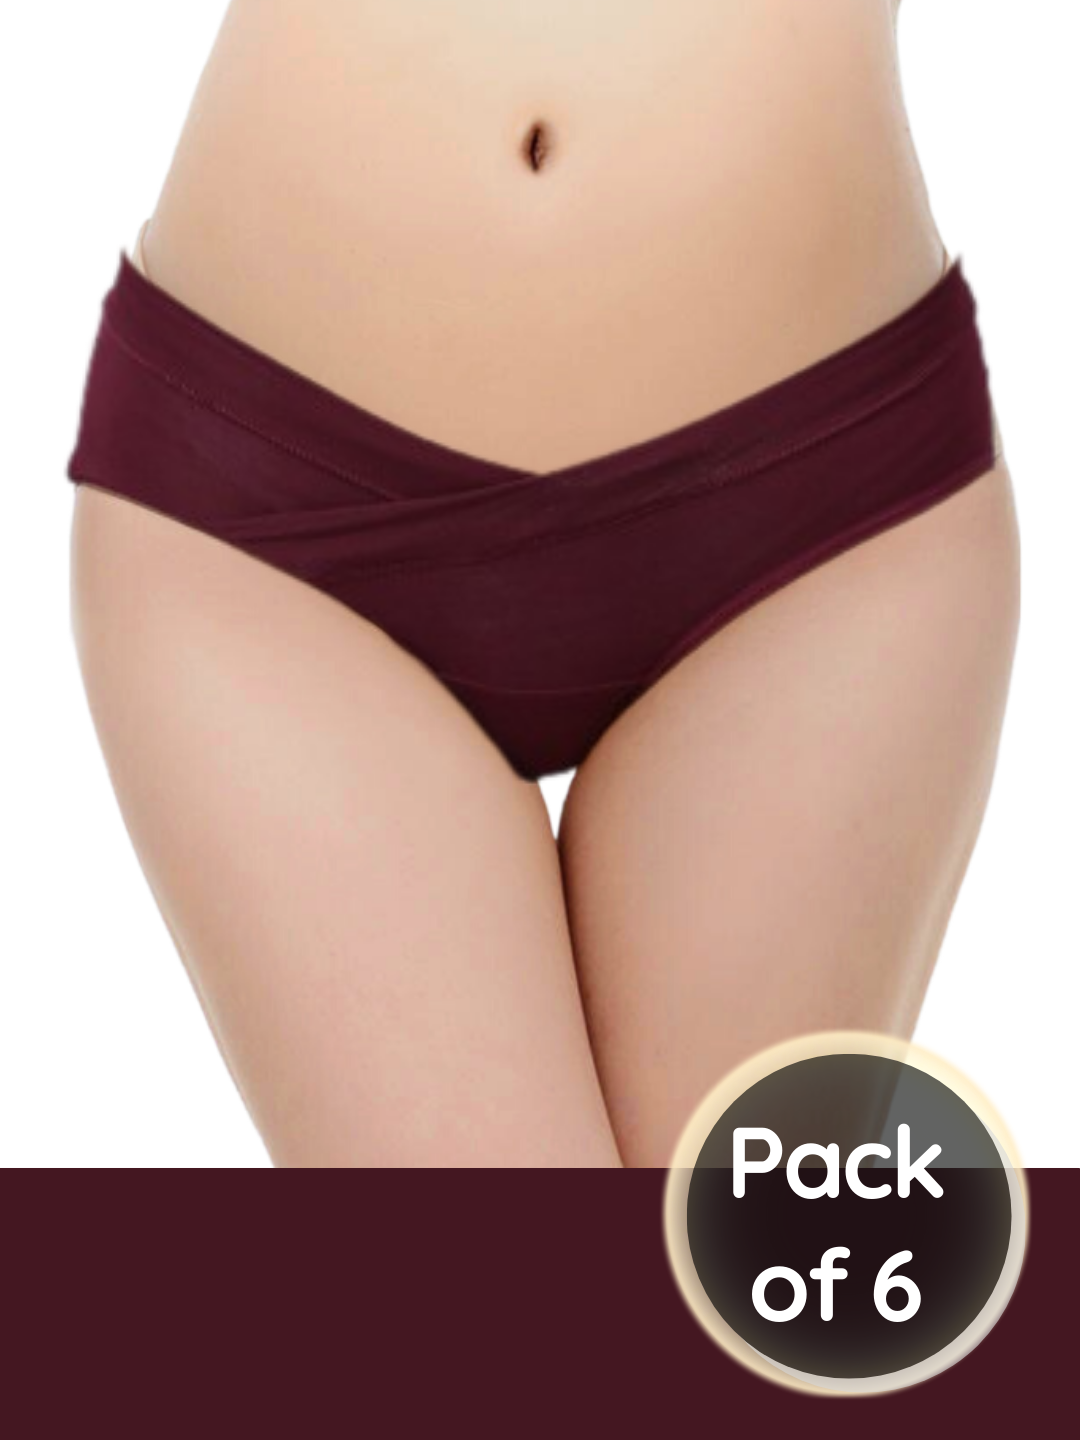 Umitay crotchless panties 3pcs Cotton U-Shaped Low Waist Maternity Underwear  Pregnant Women Panties Pregnancy Briefs 